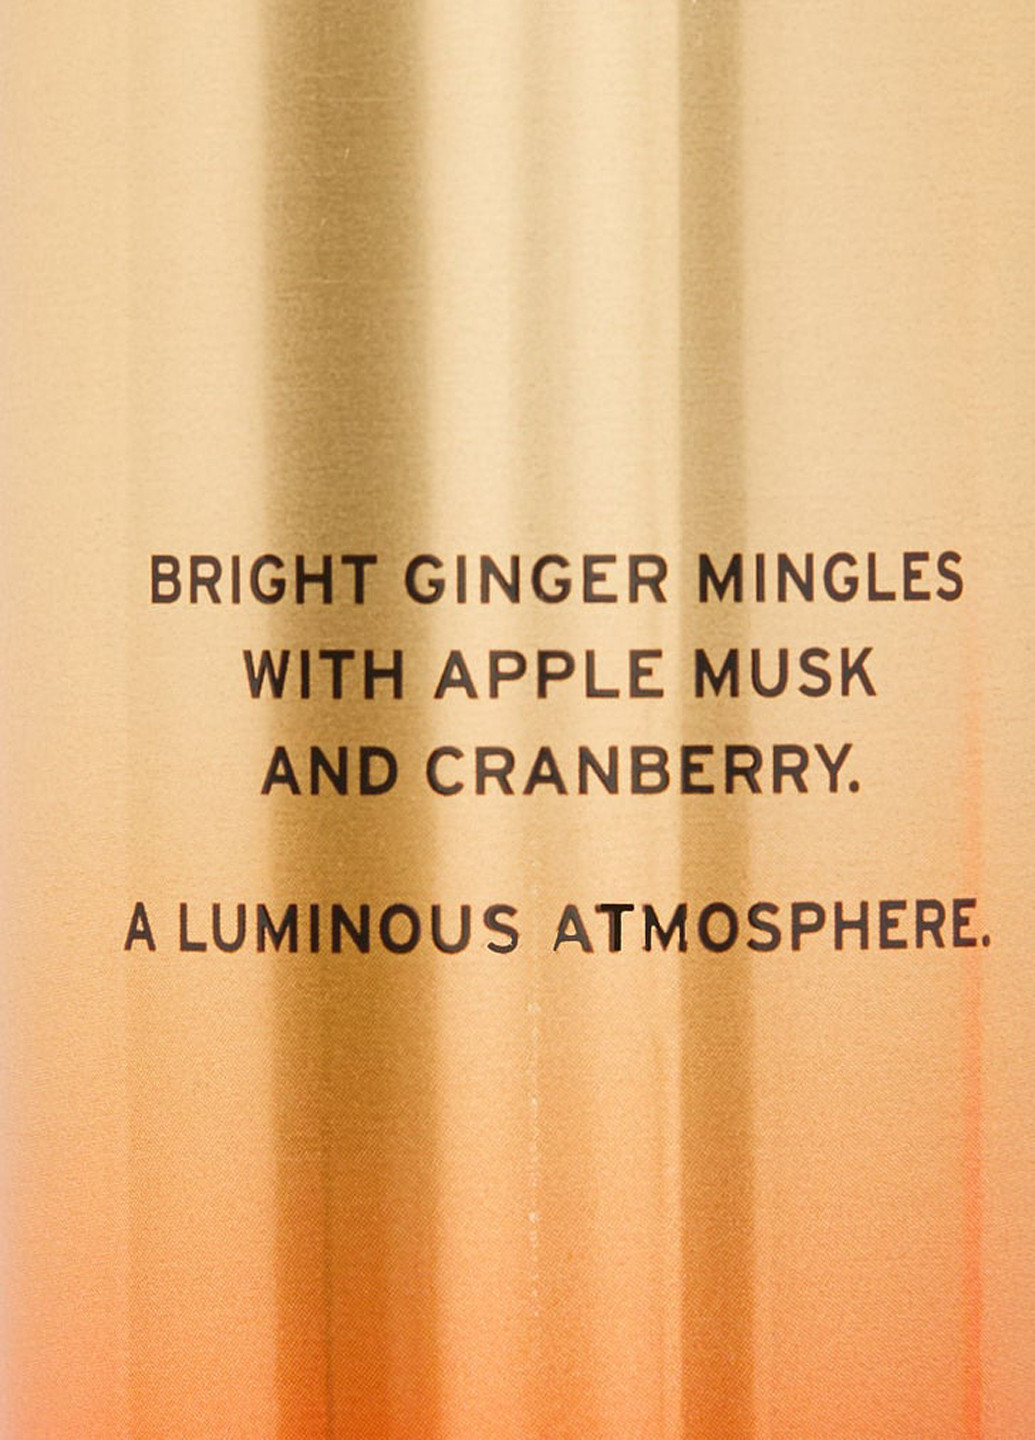 Набір для тіла Ginger Apple Jewel Victoria's Secret (276538584)